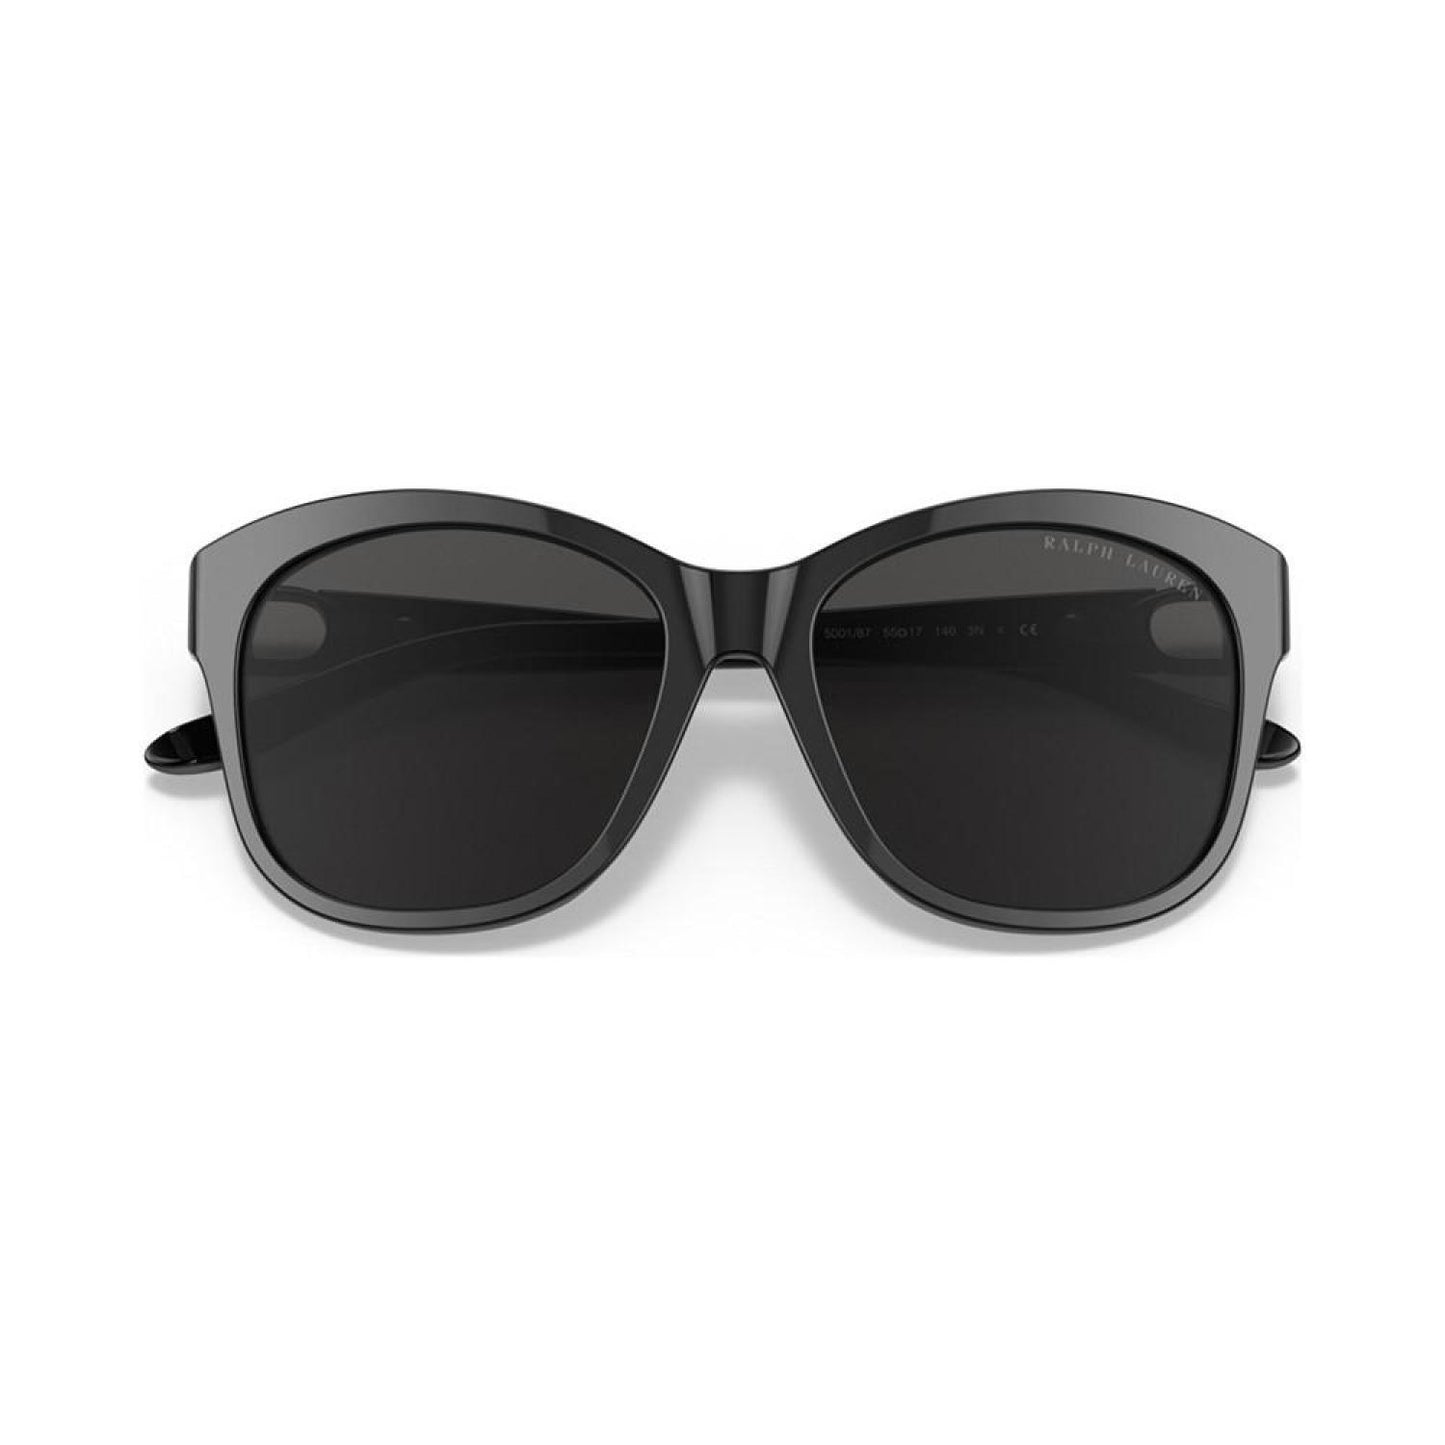 Women's Sunglasses, RL8190Q